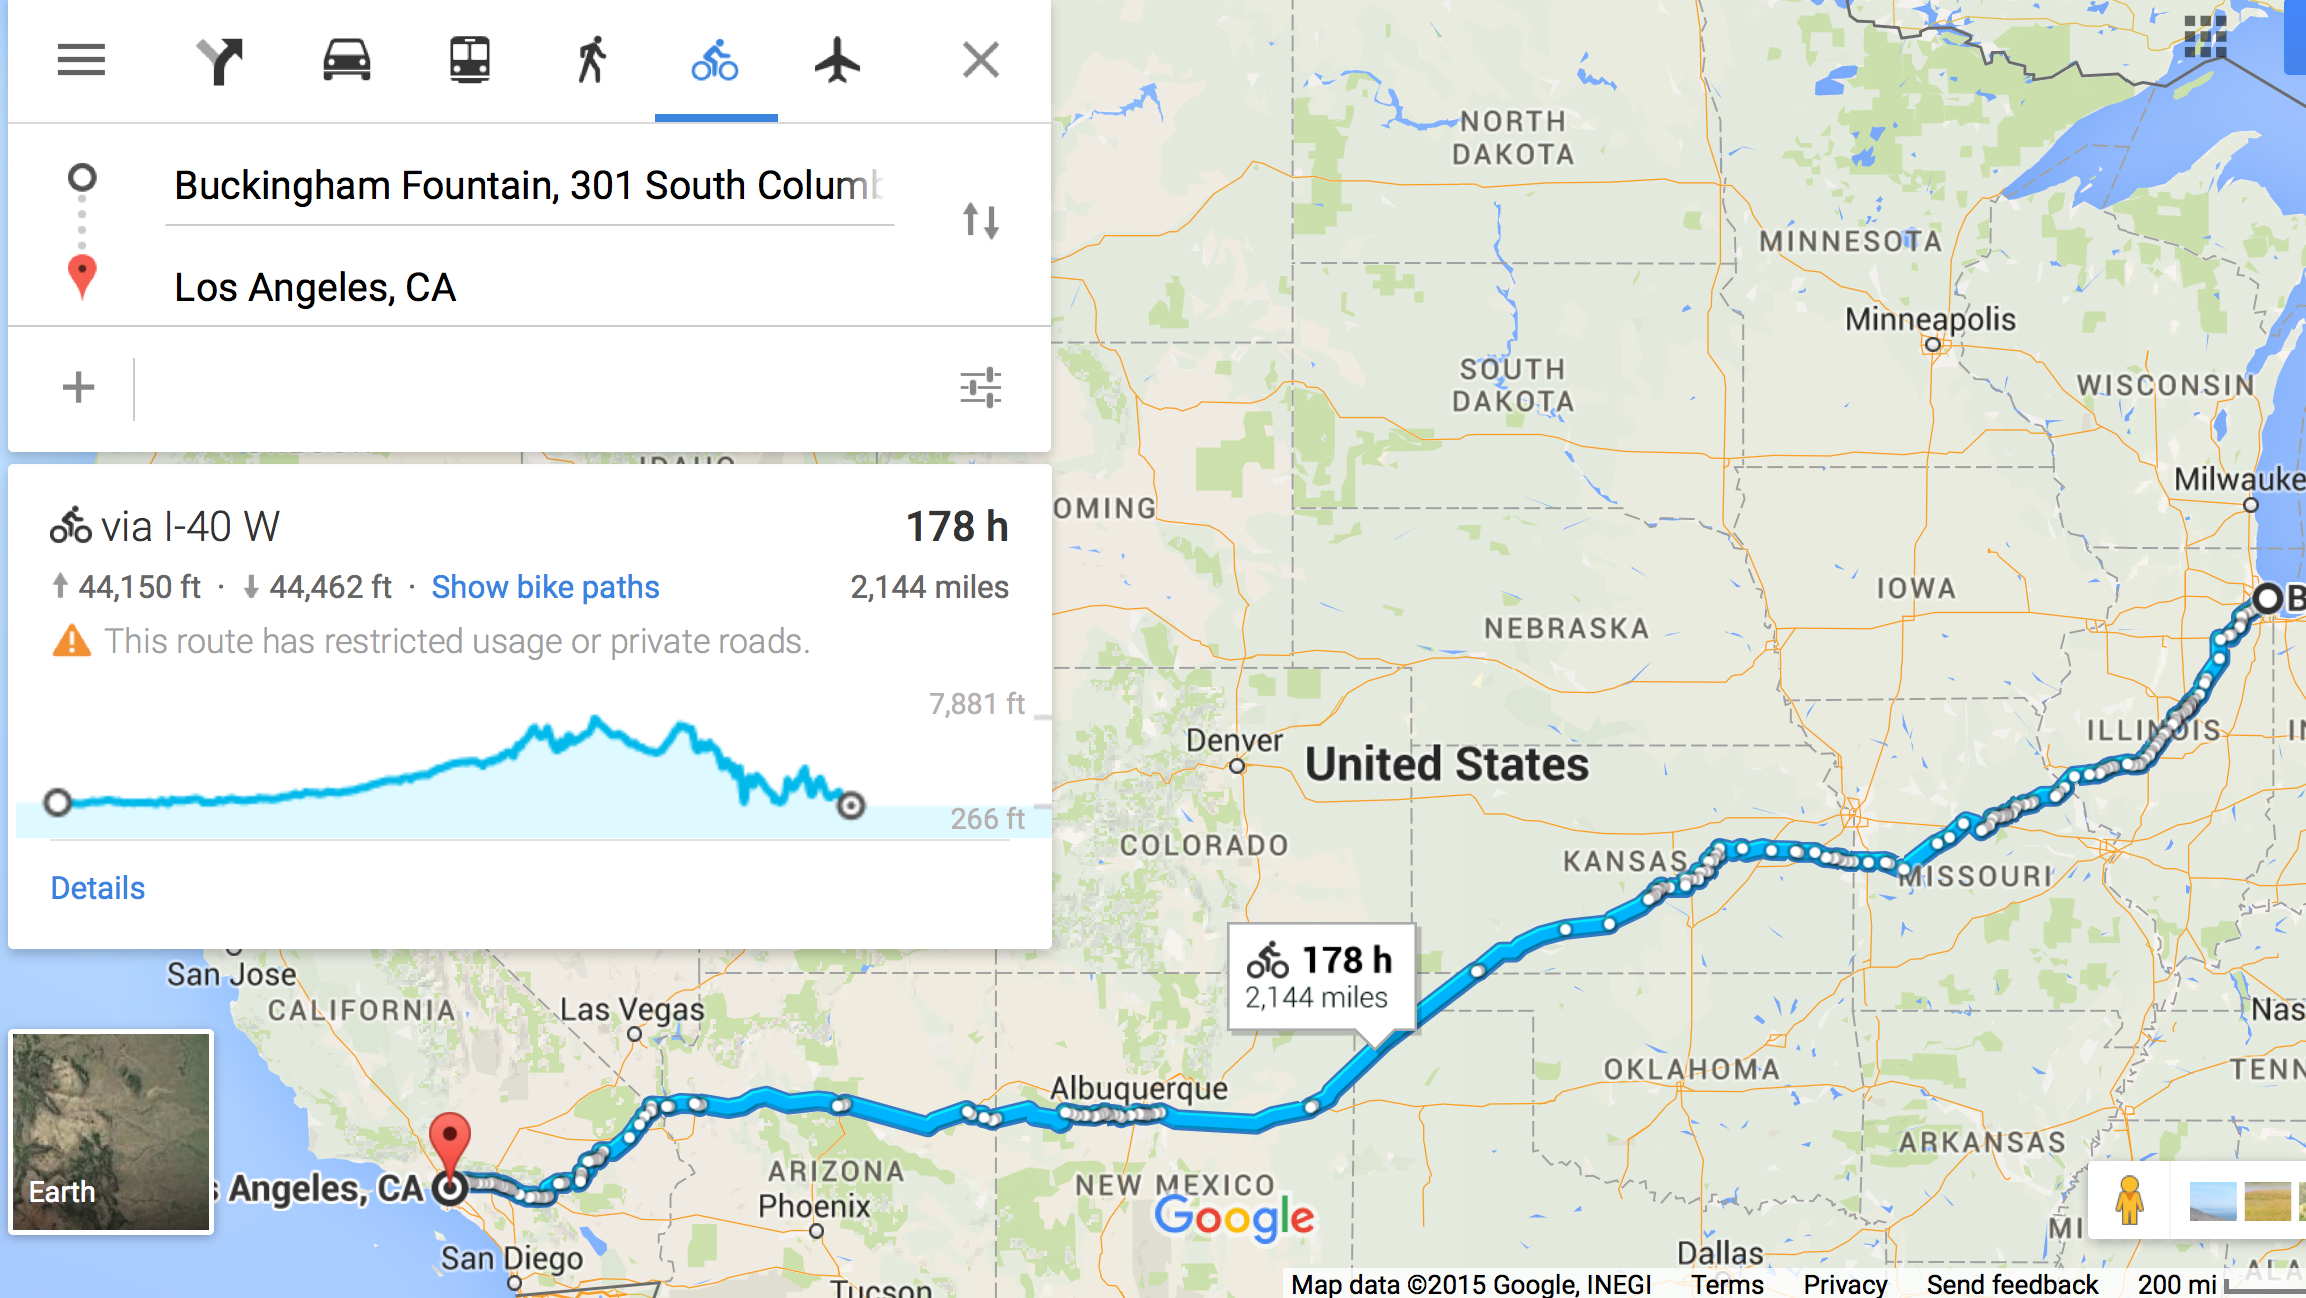 Google maps route 66